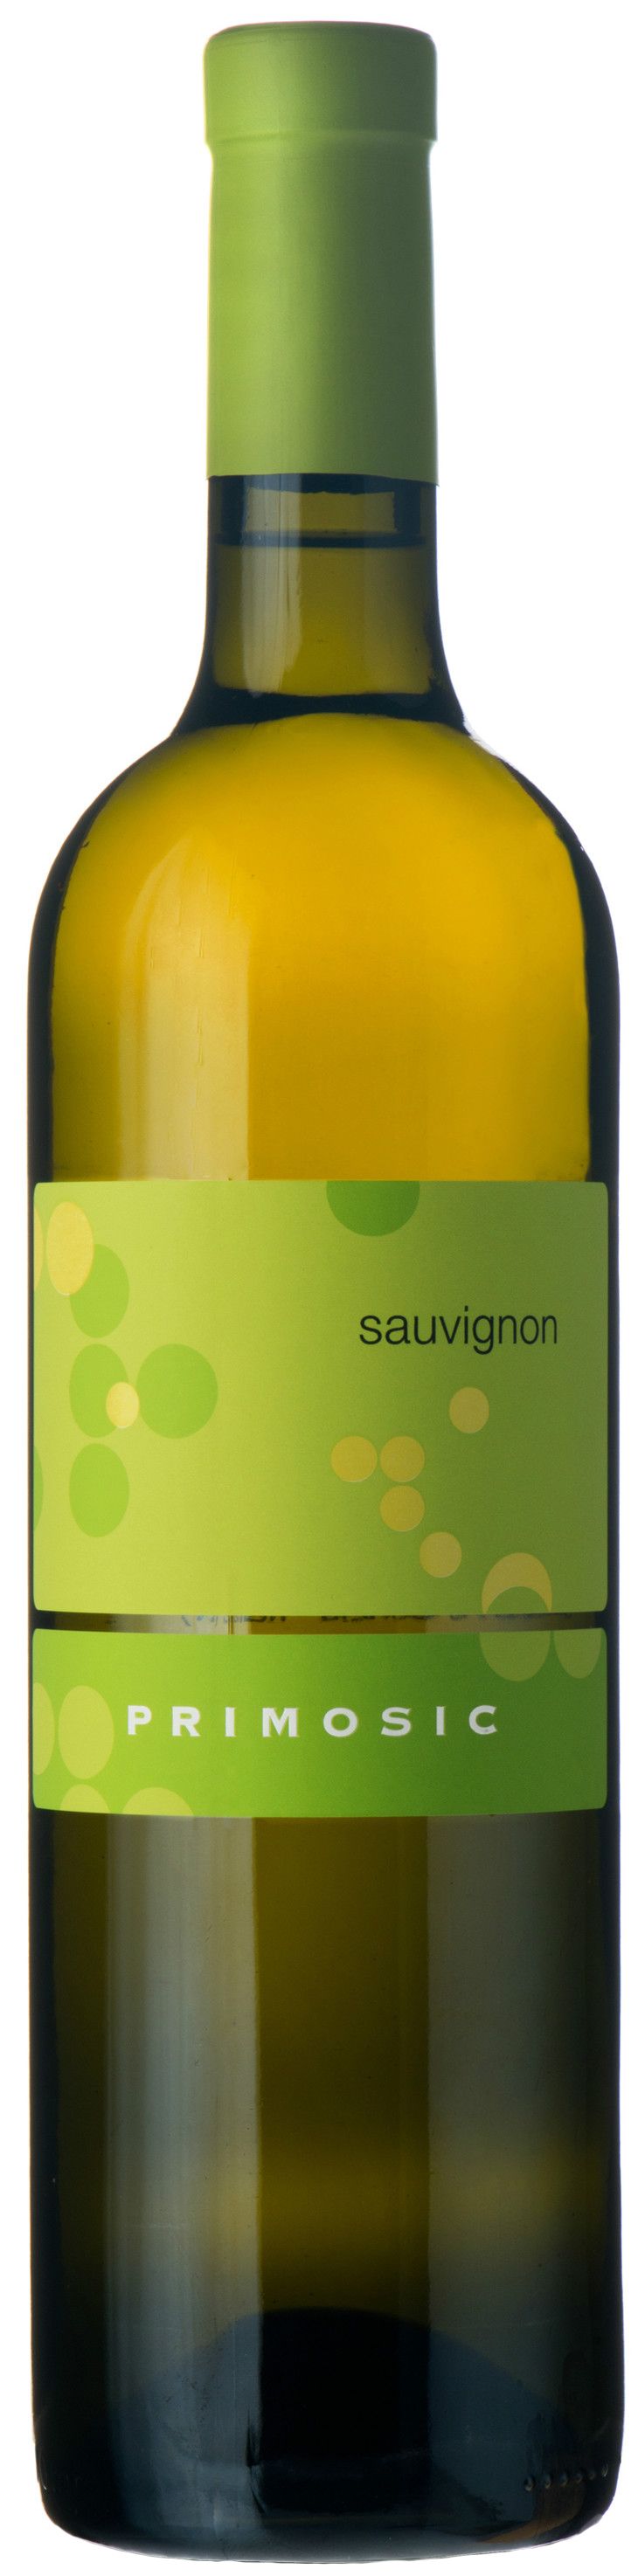 Primosic, Sauvignon Blanc, 2015